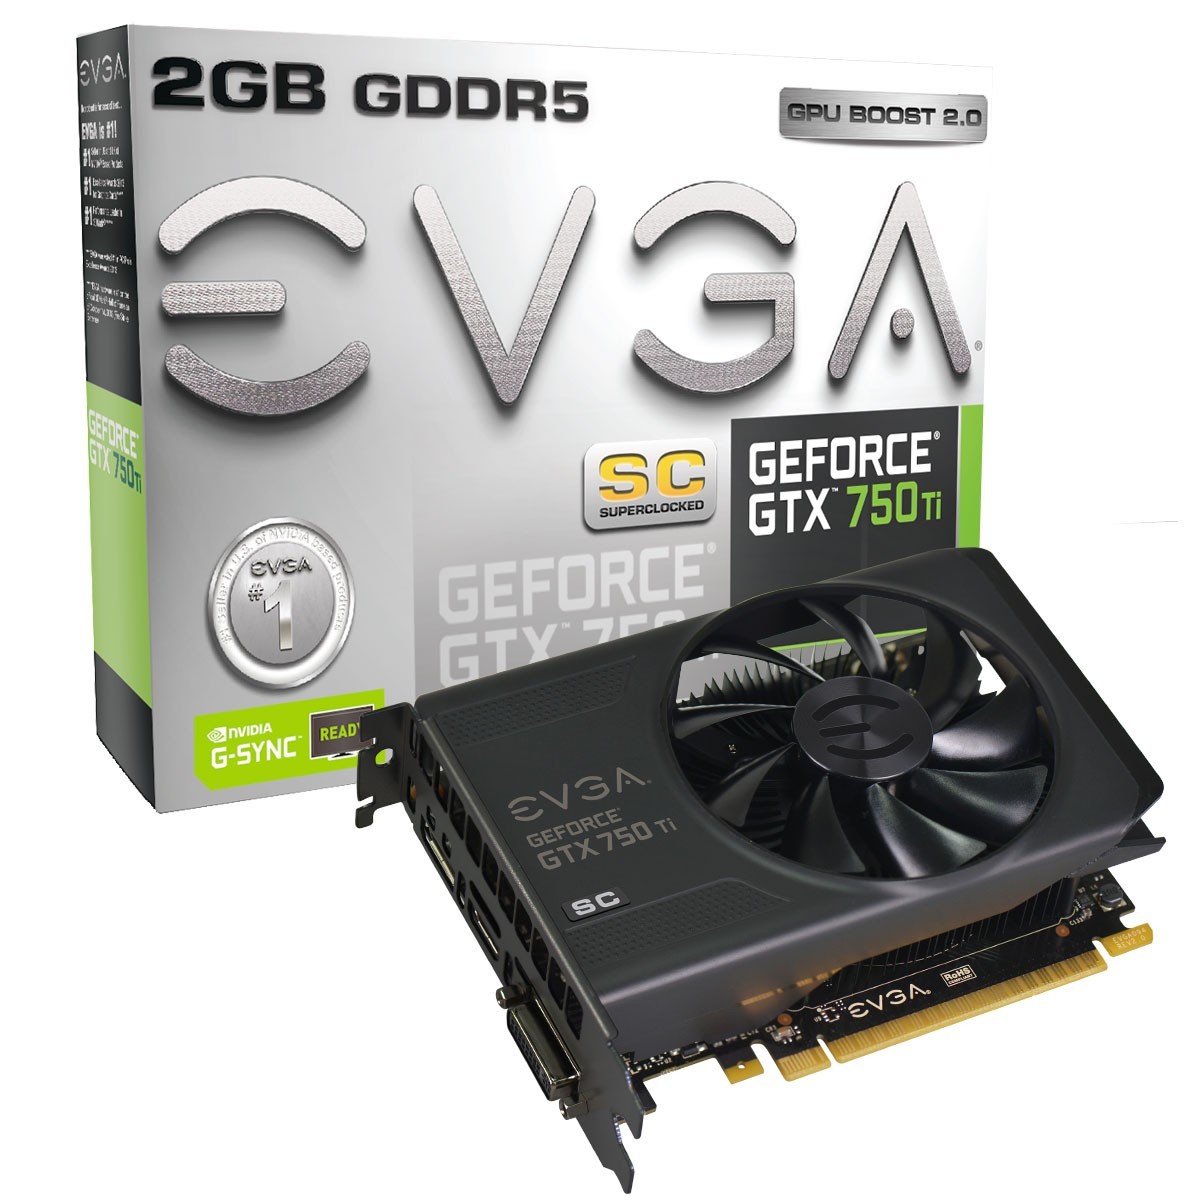 Видеокарты EVGA GeForce GTX 750 Ti 02G-P4-3753-KR